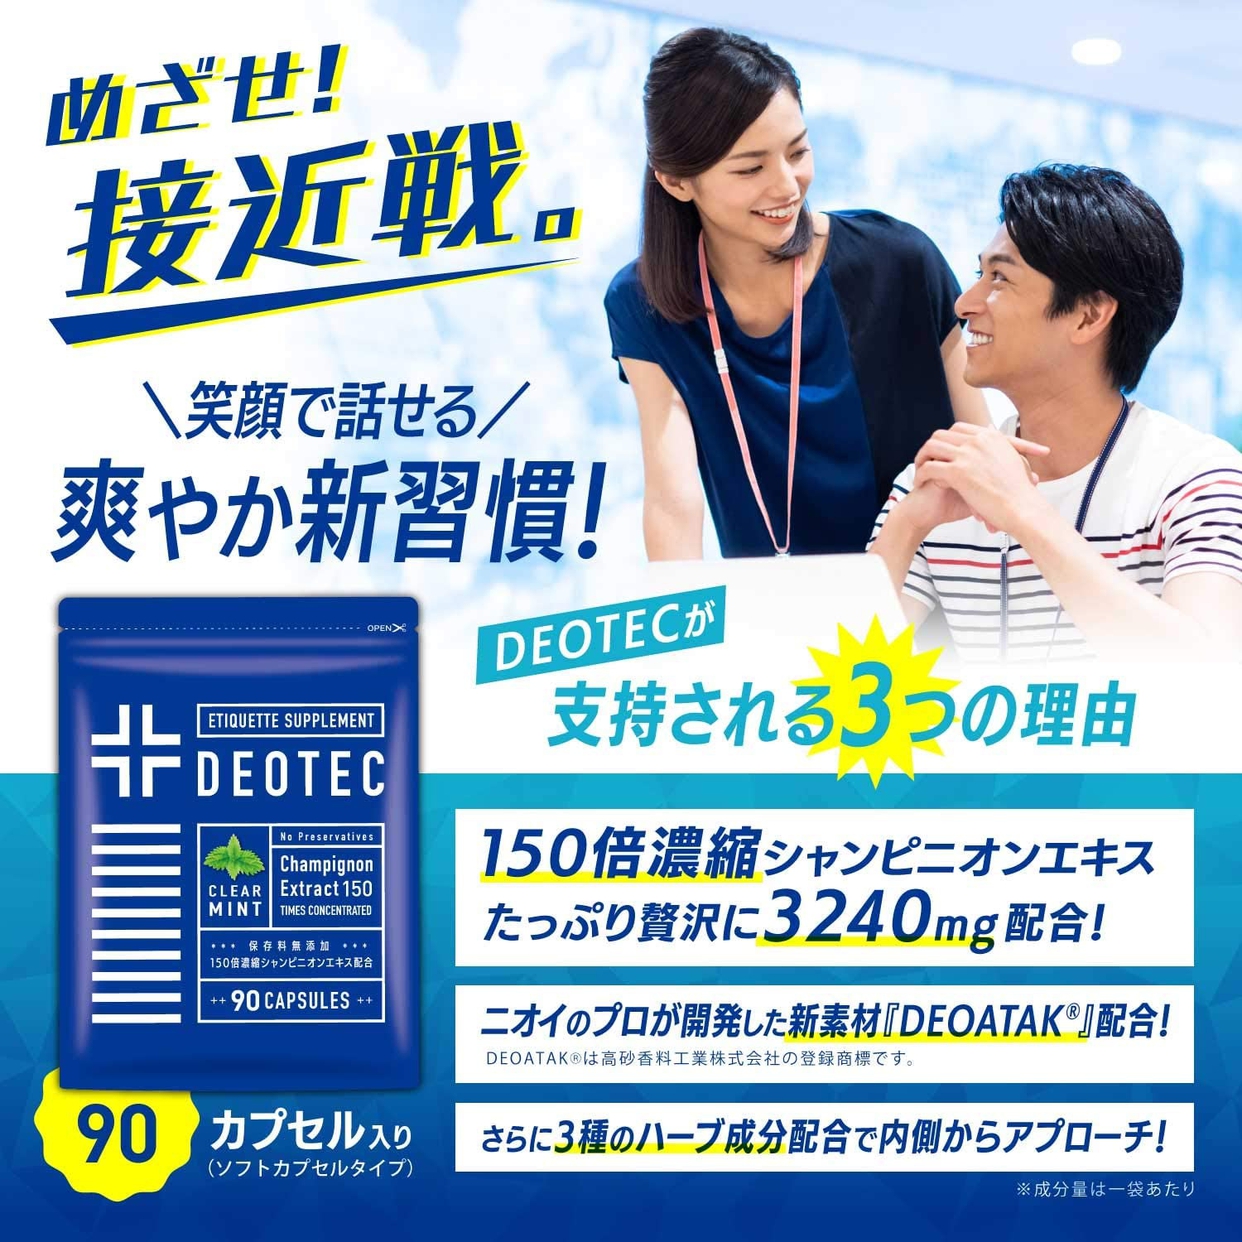 One Life Supplements(ワンライフサプリメント) DEOTECの商品画像サムネ2 